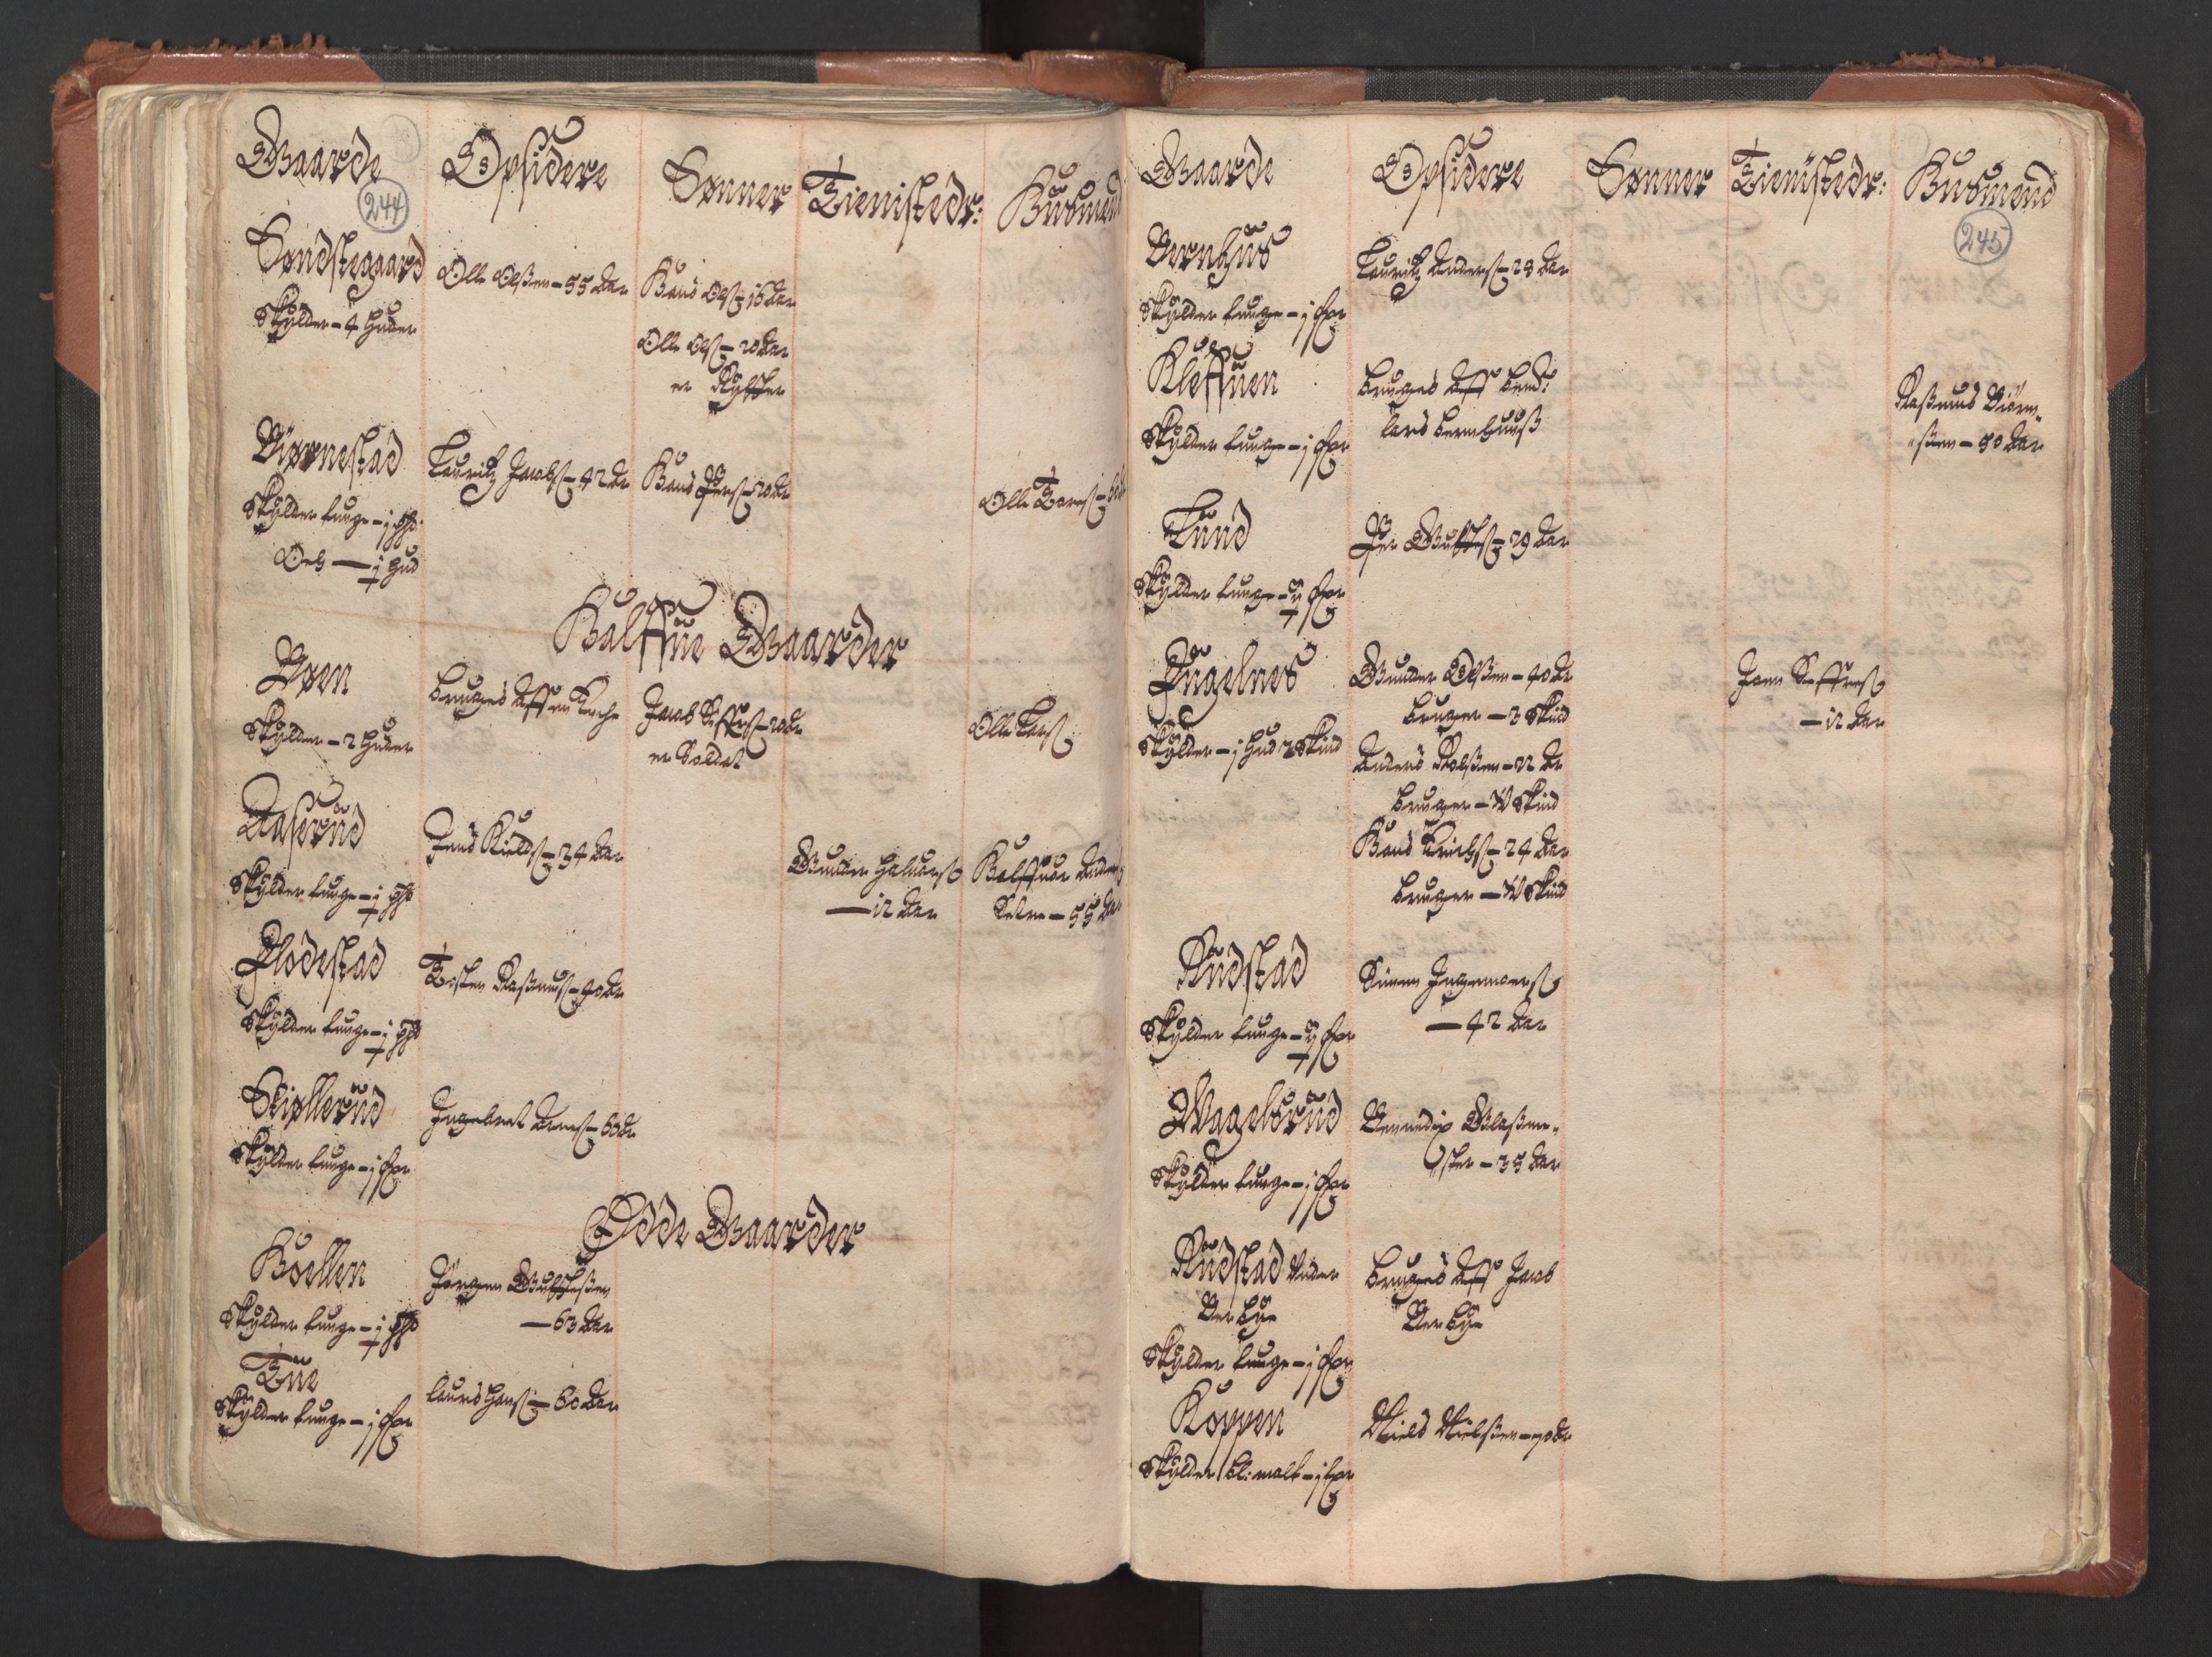 RA, Fogdenes og sorenskrivernes manntall 1664-1666, nr. 1: Fogderier (len og skipreider) i nåværende Østfold fylke, 1664, s. 244-245